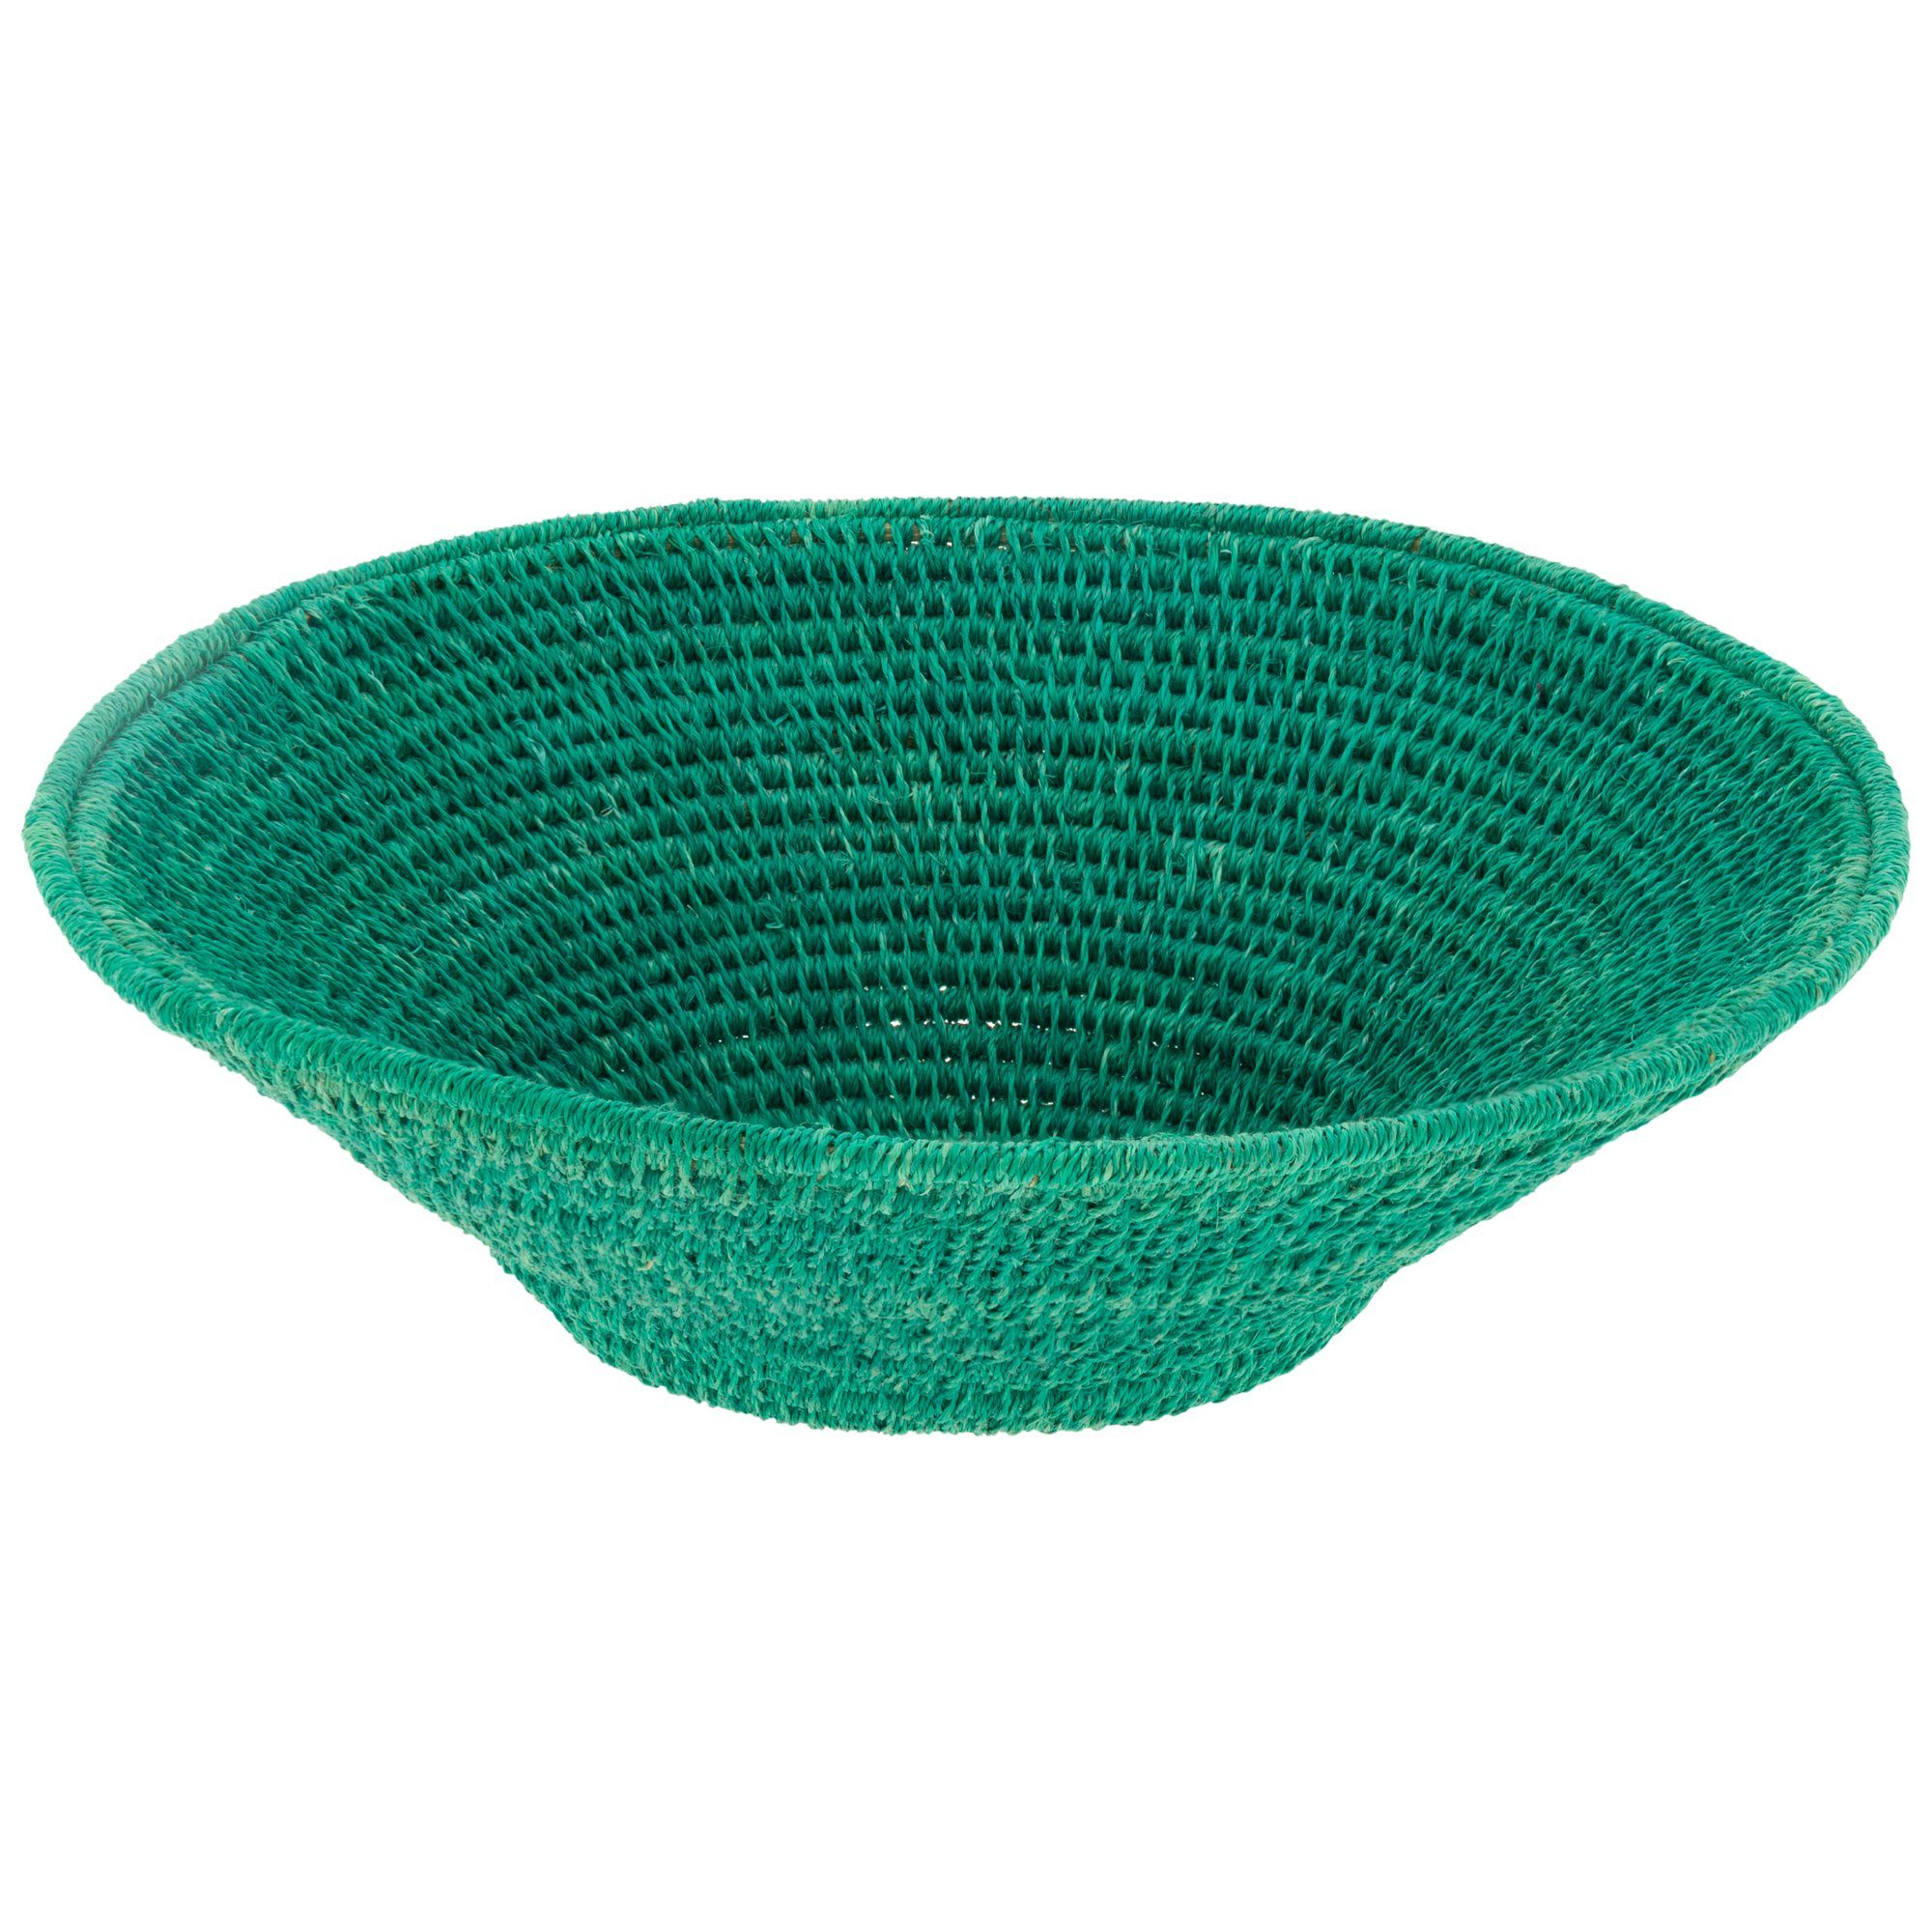 Handwoven Sisal Petite Basket - Green